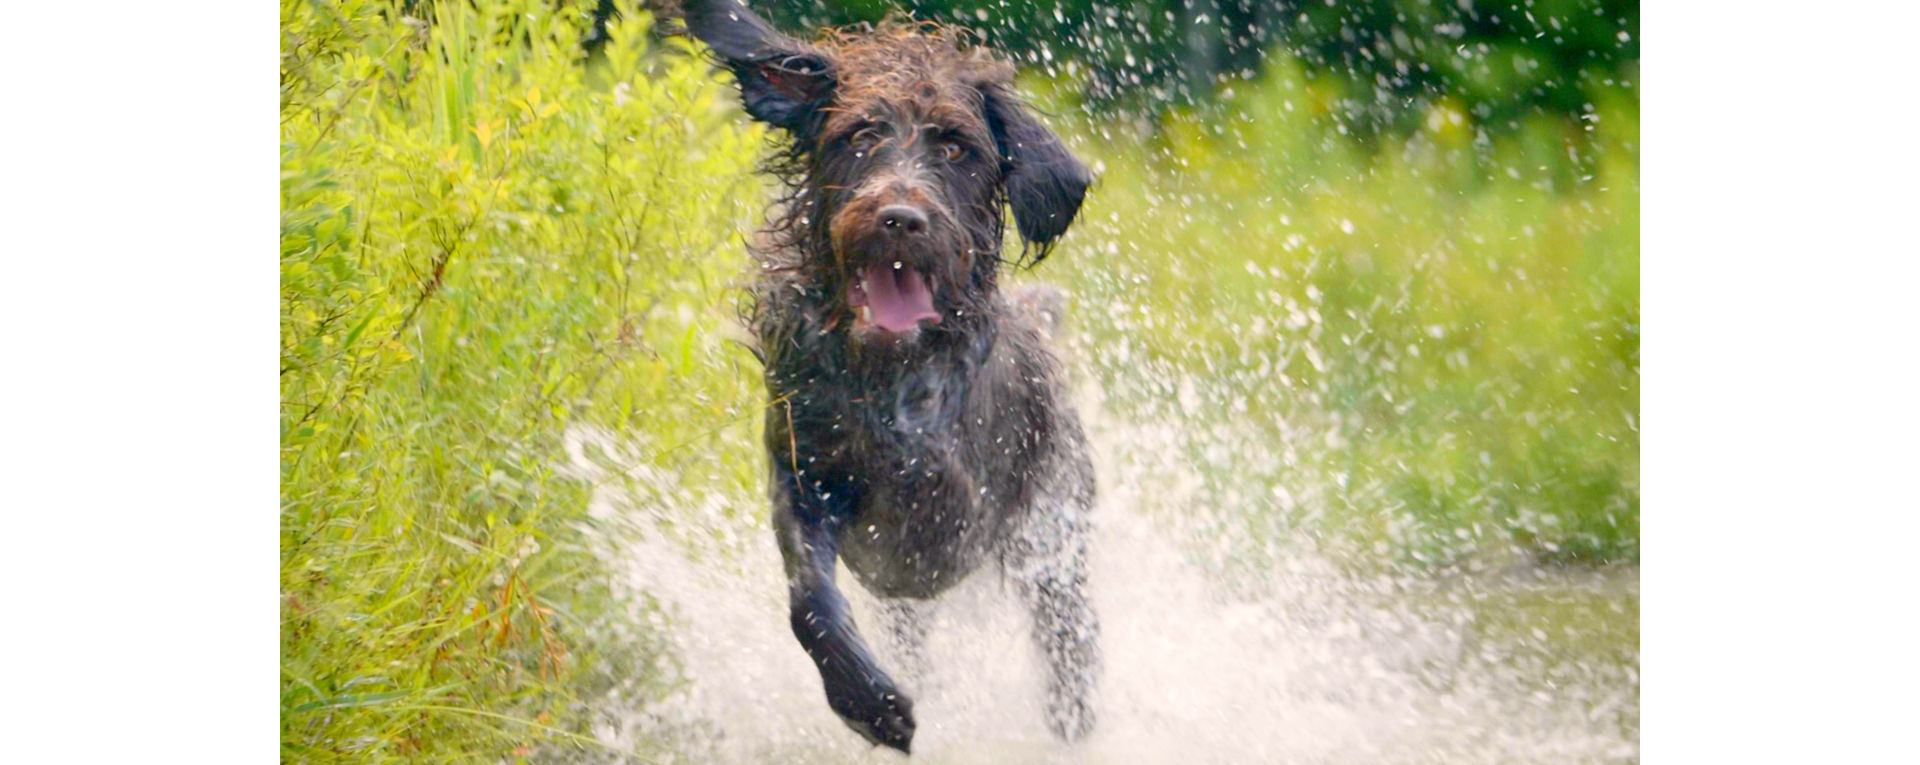 A furry dog named Bromley running through a field.